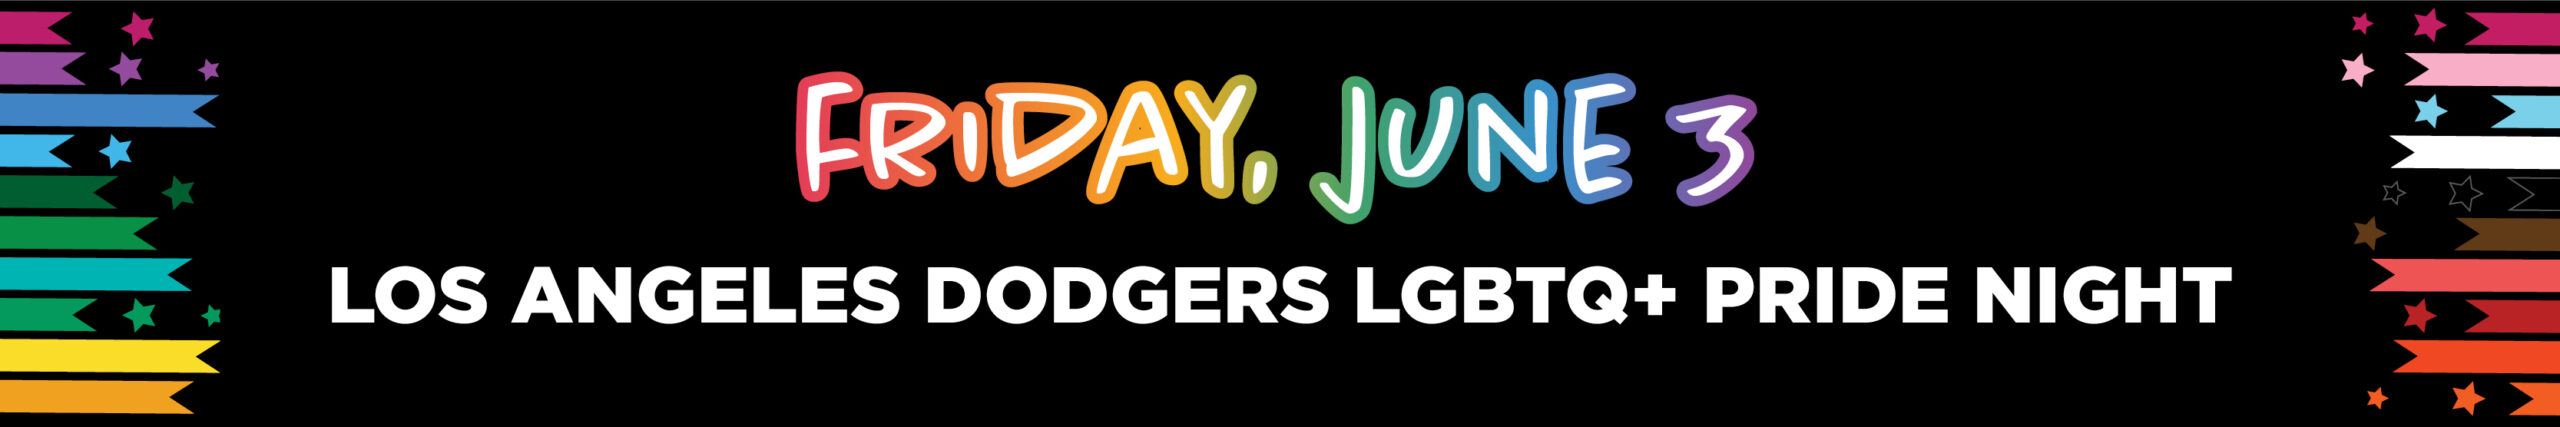 Friday, June 3 Los Angeles Dodgers LGBTQ+ Pride Night